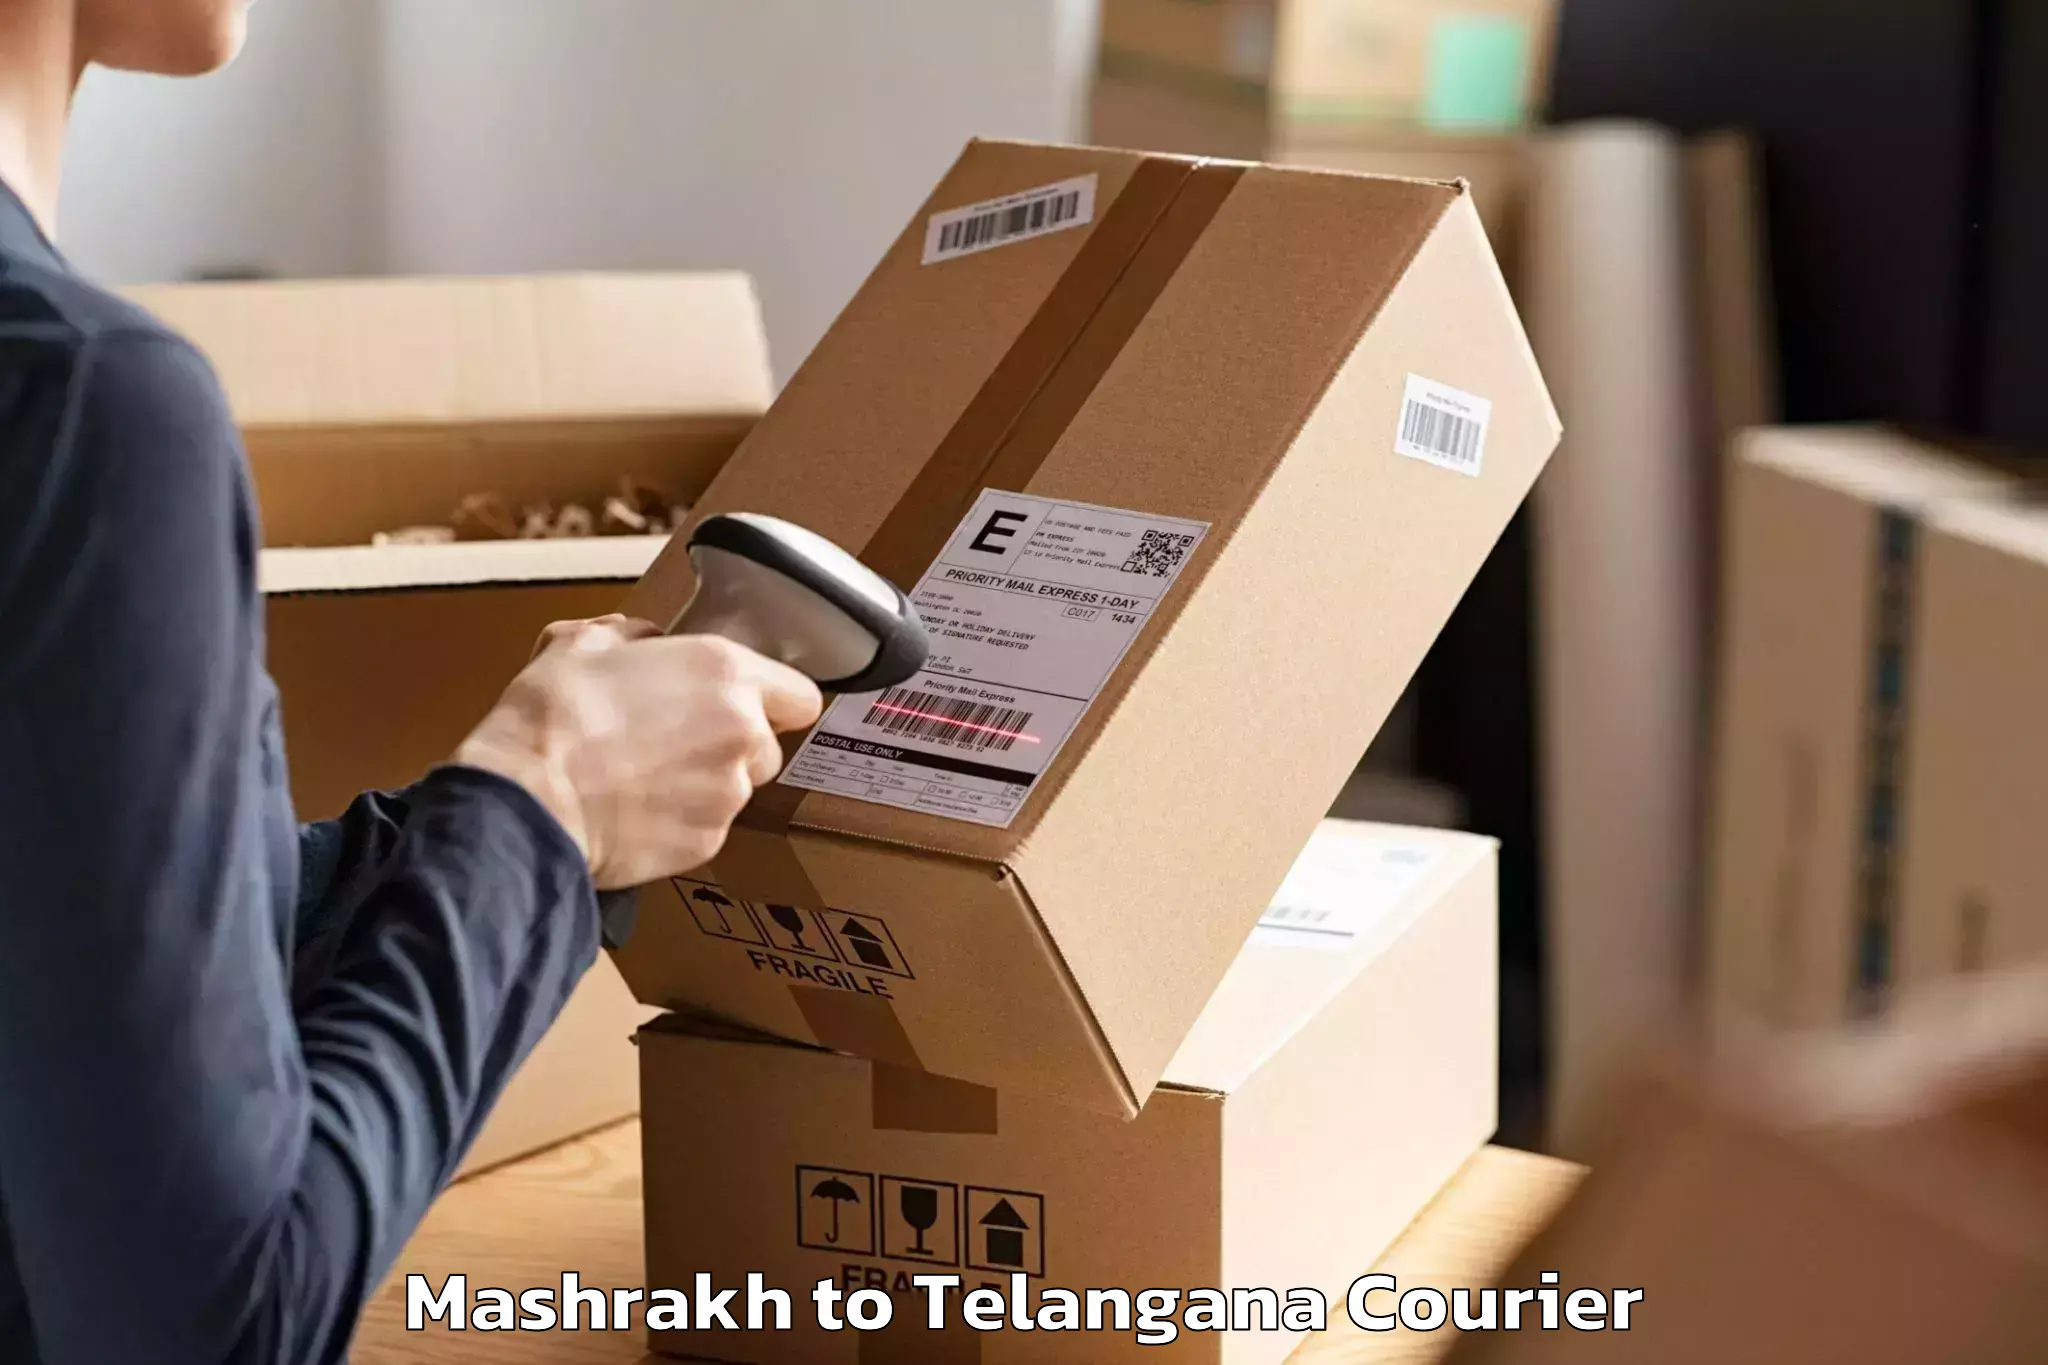 Moving and storage services Mashrakh to Telangana